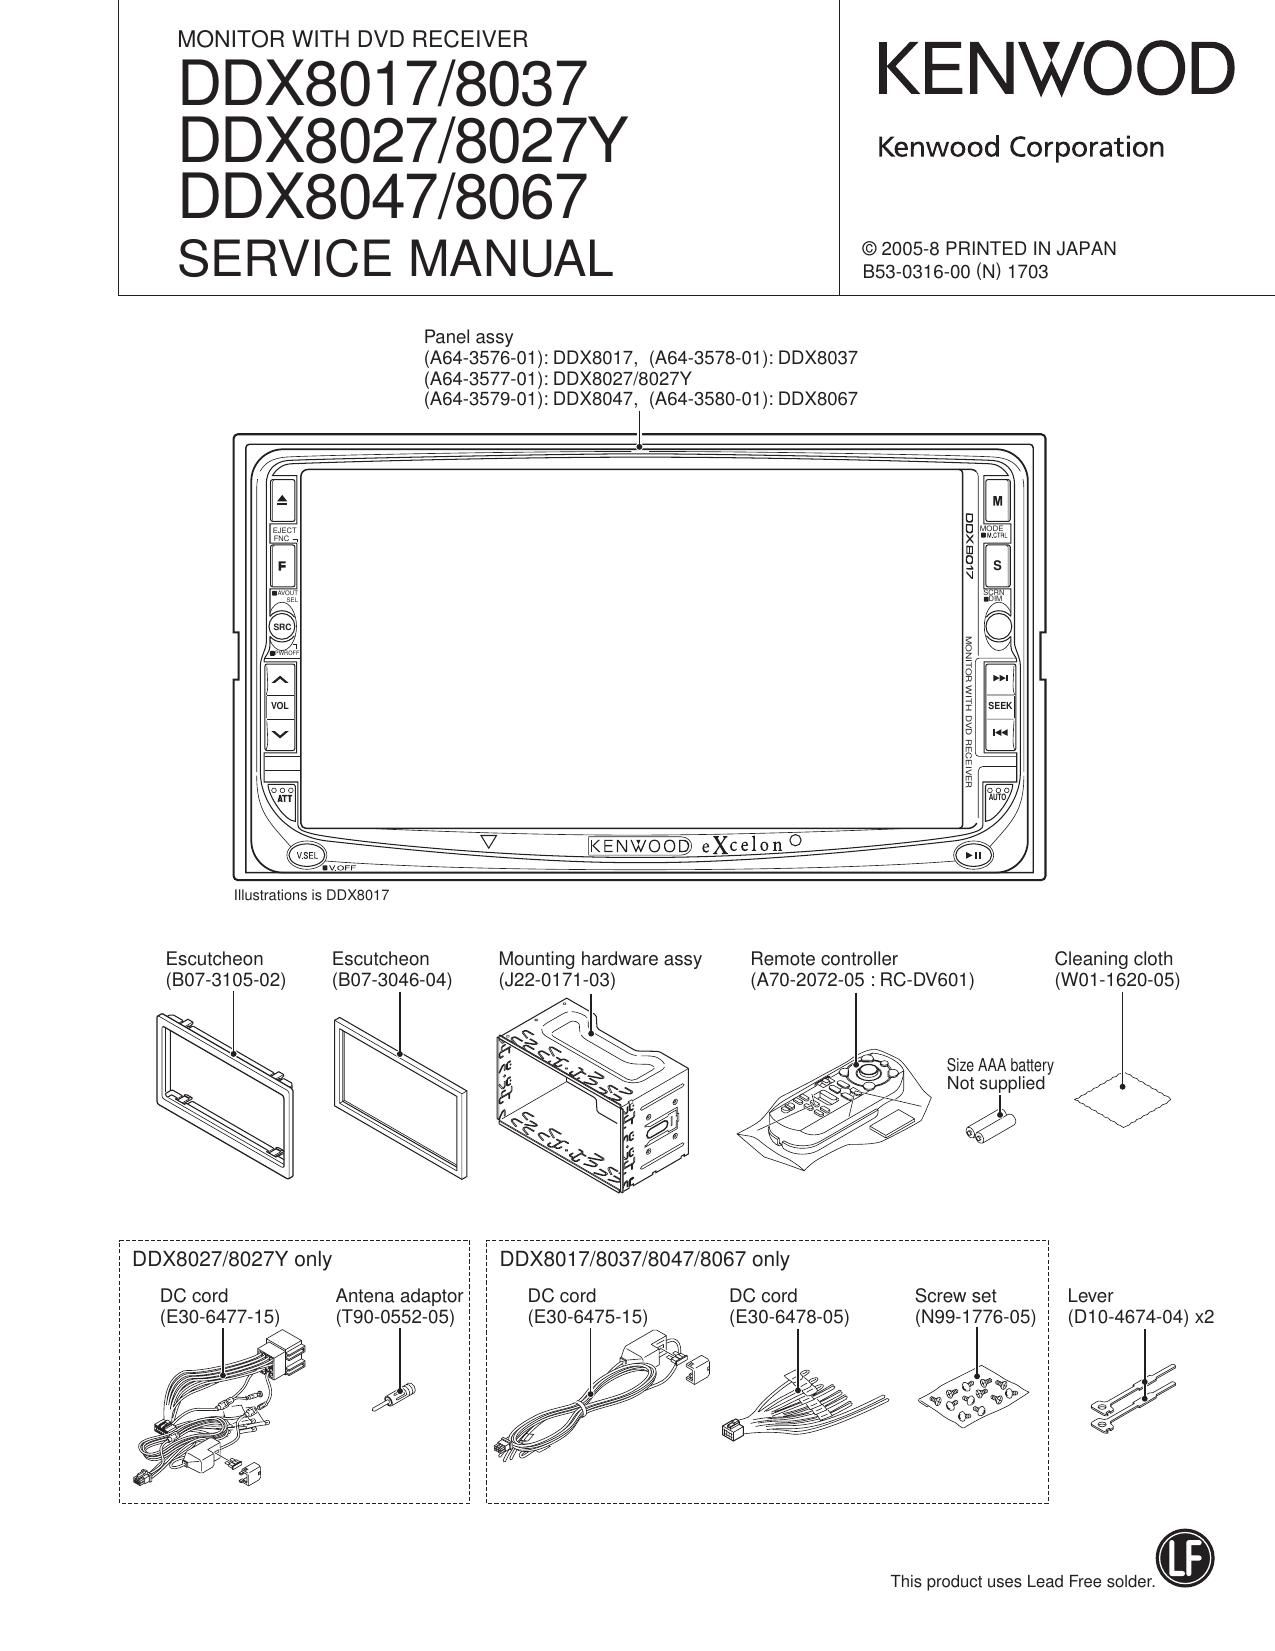 Kenwood DDX 8027 Service Manual